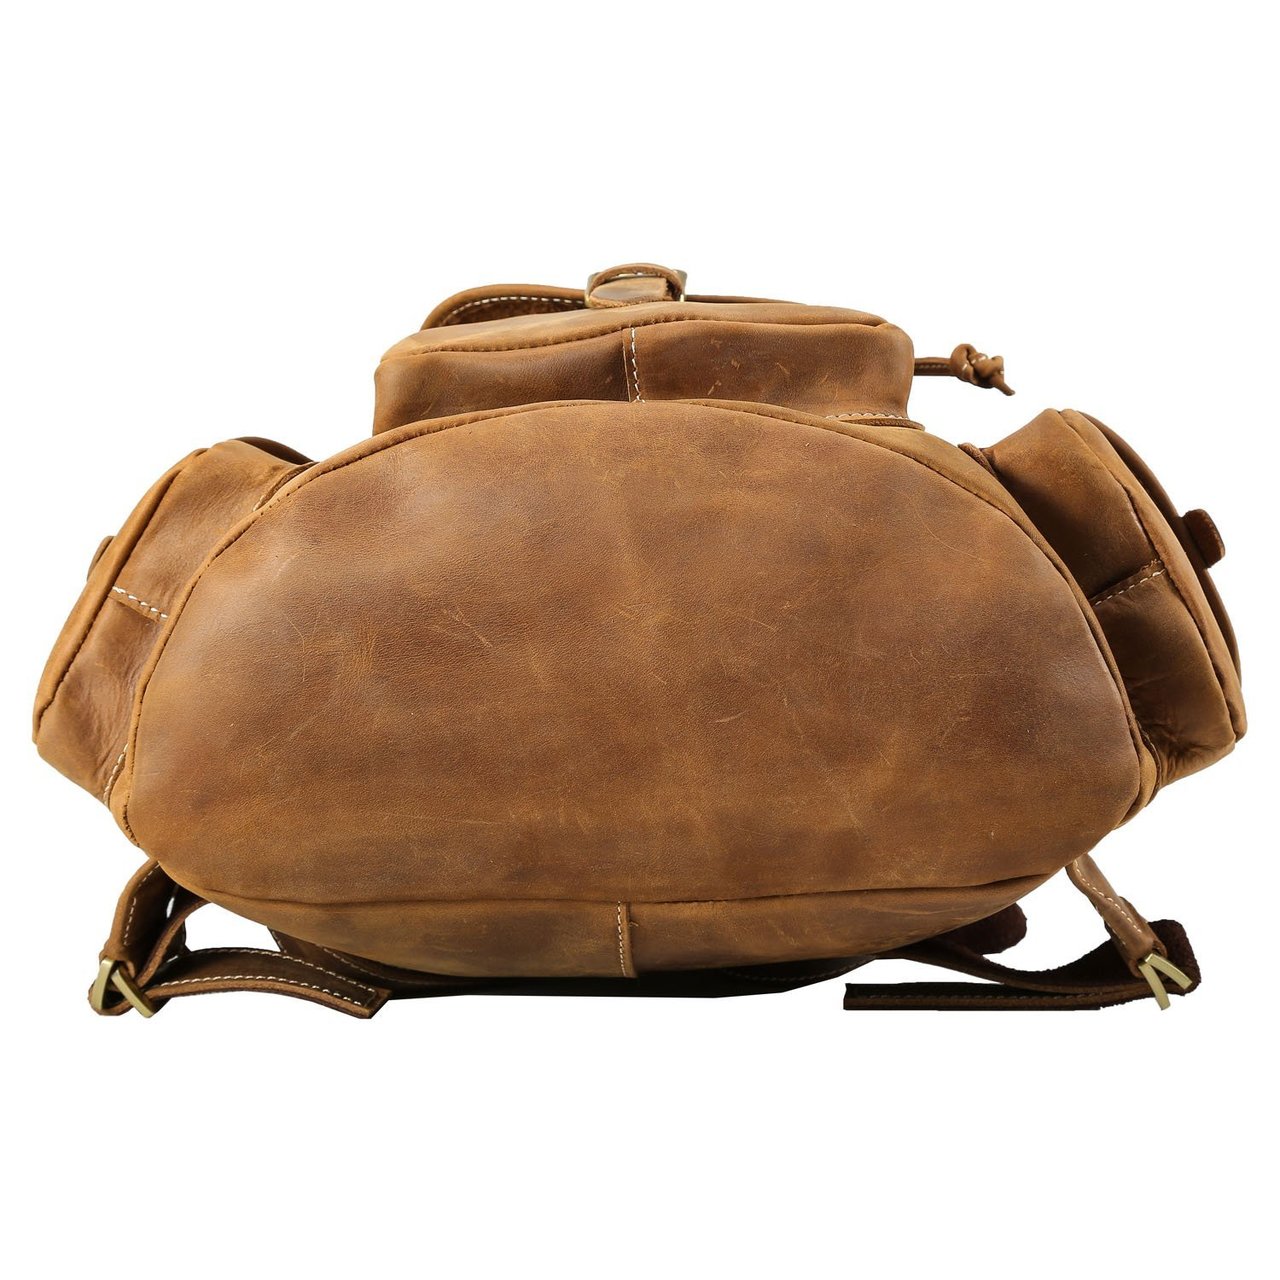 Pratt Leather Vintage Leather Backpack PL-457